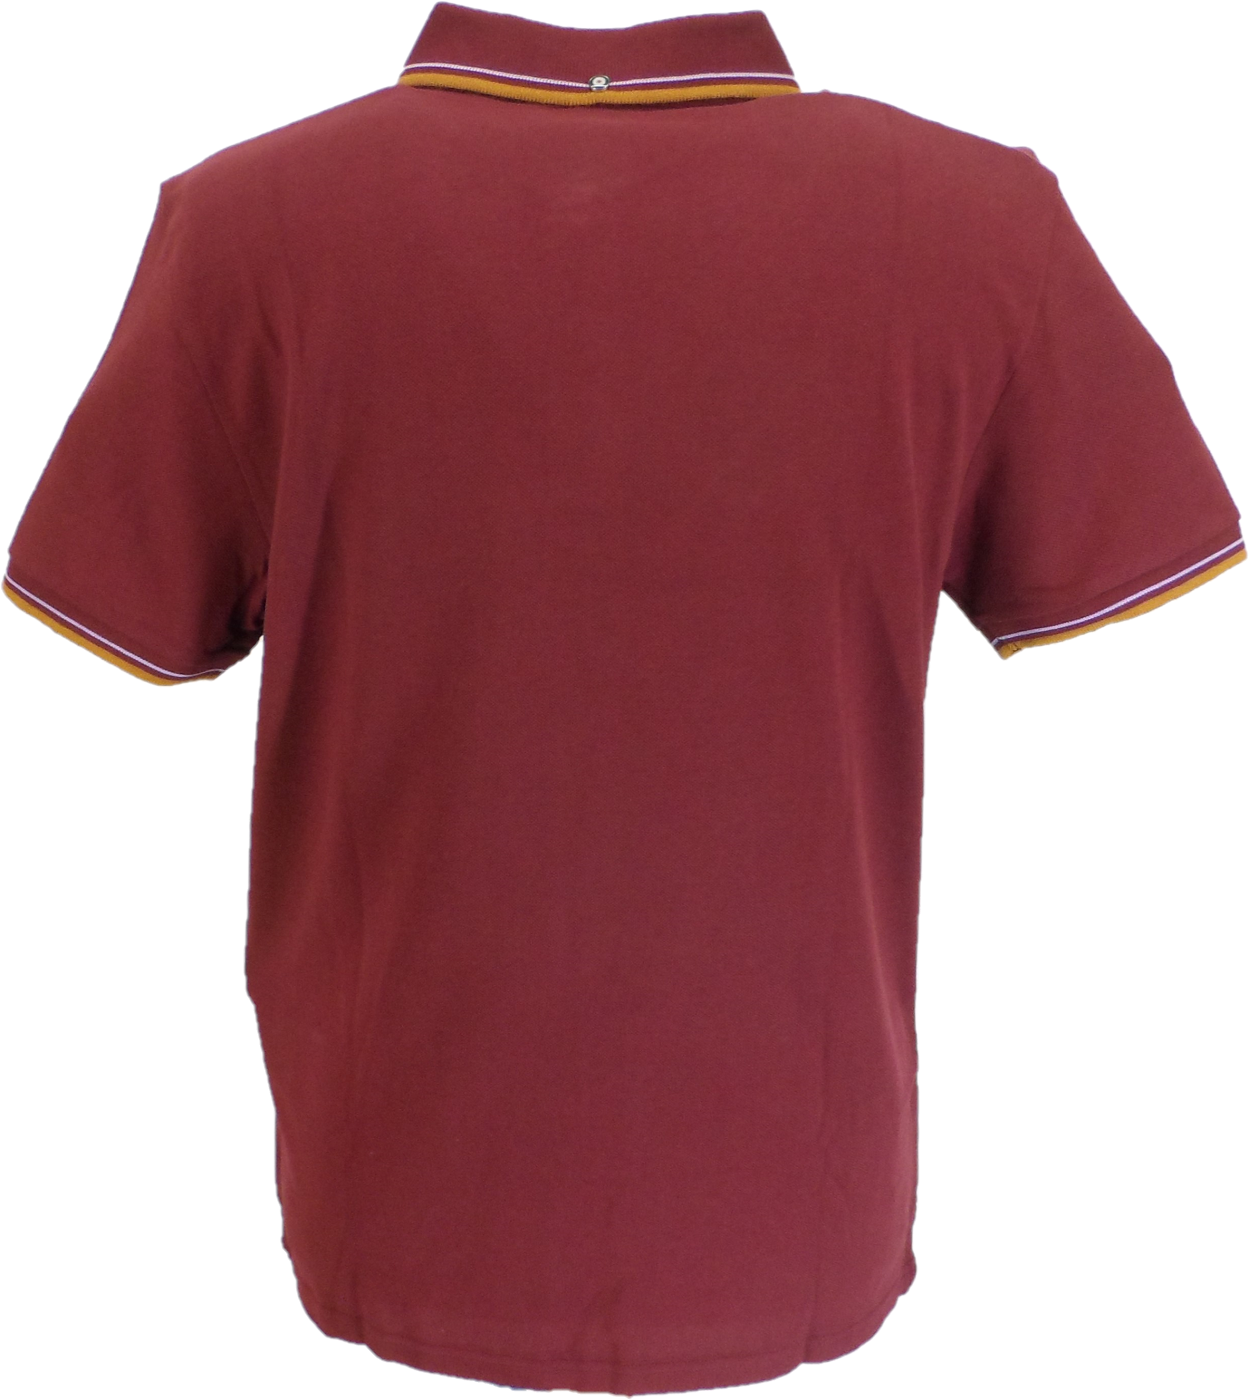 Ben Sherman Men's Port Red Signature 100% Cotton Polo Shirt